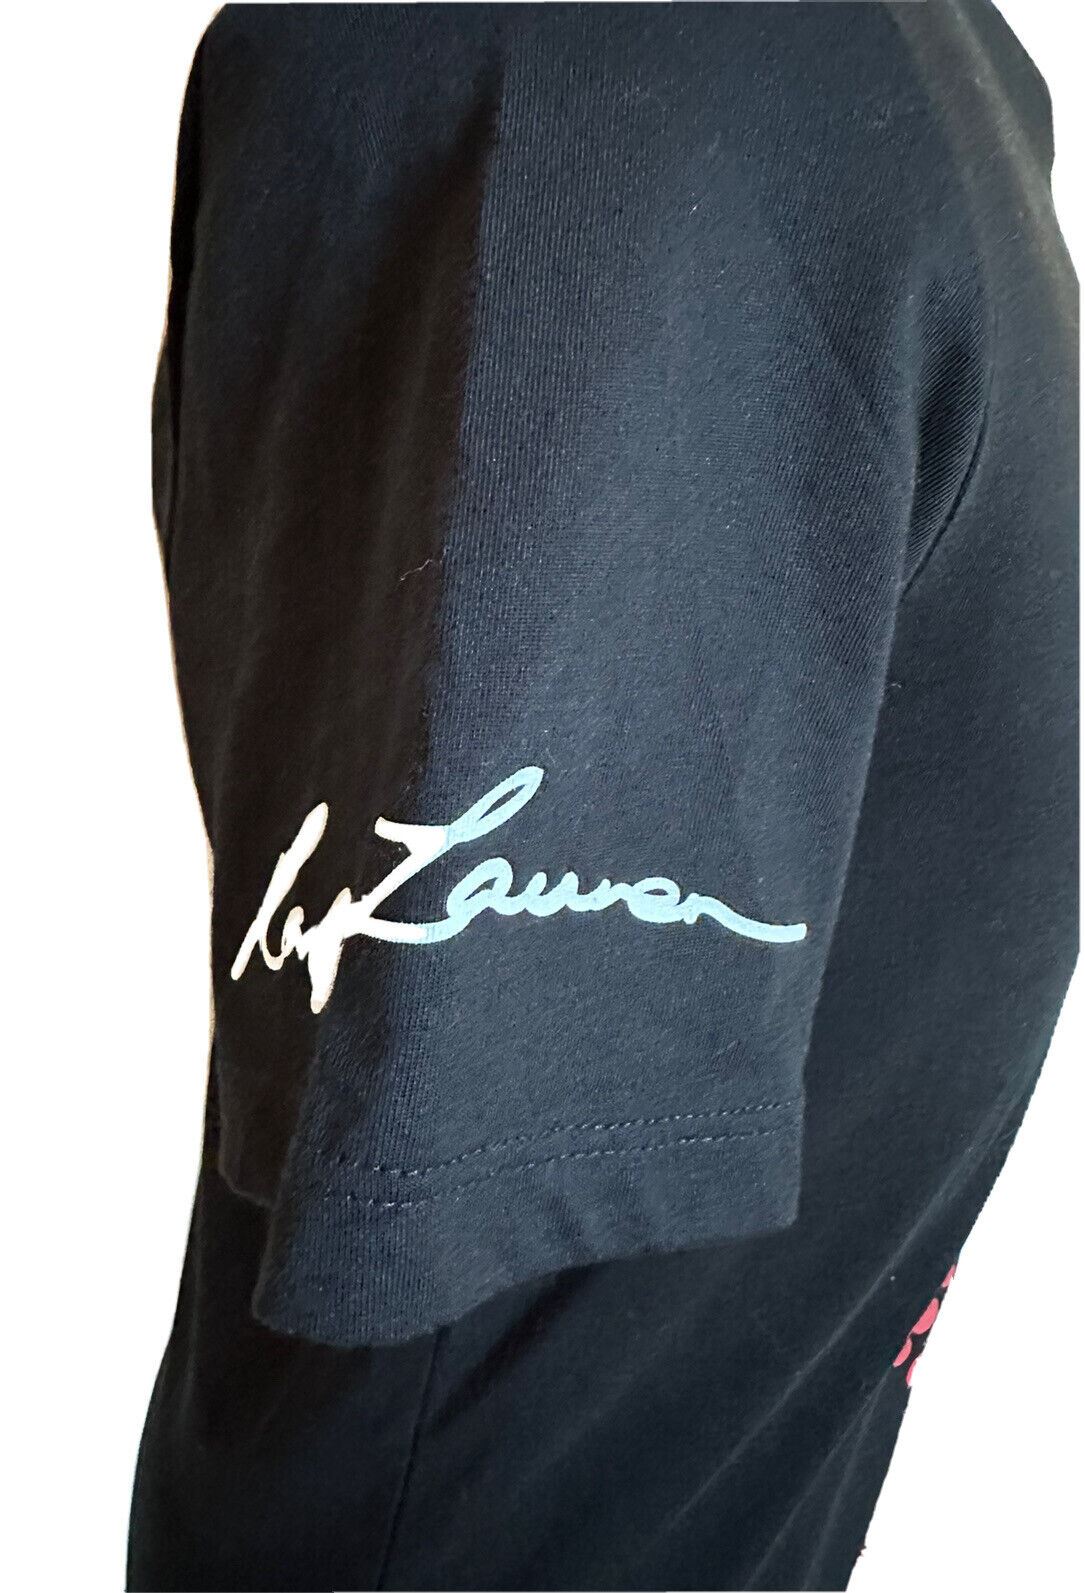 Черная футболка с логотипом и короткими рукавами Polo Ralph Lauren, размер NWT 65 долларов США (L) 